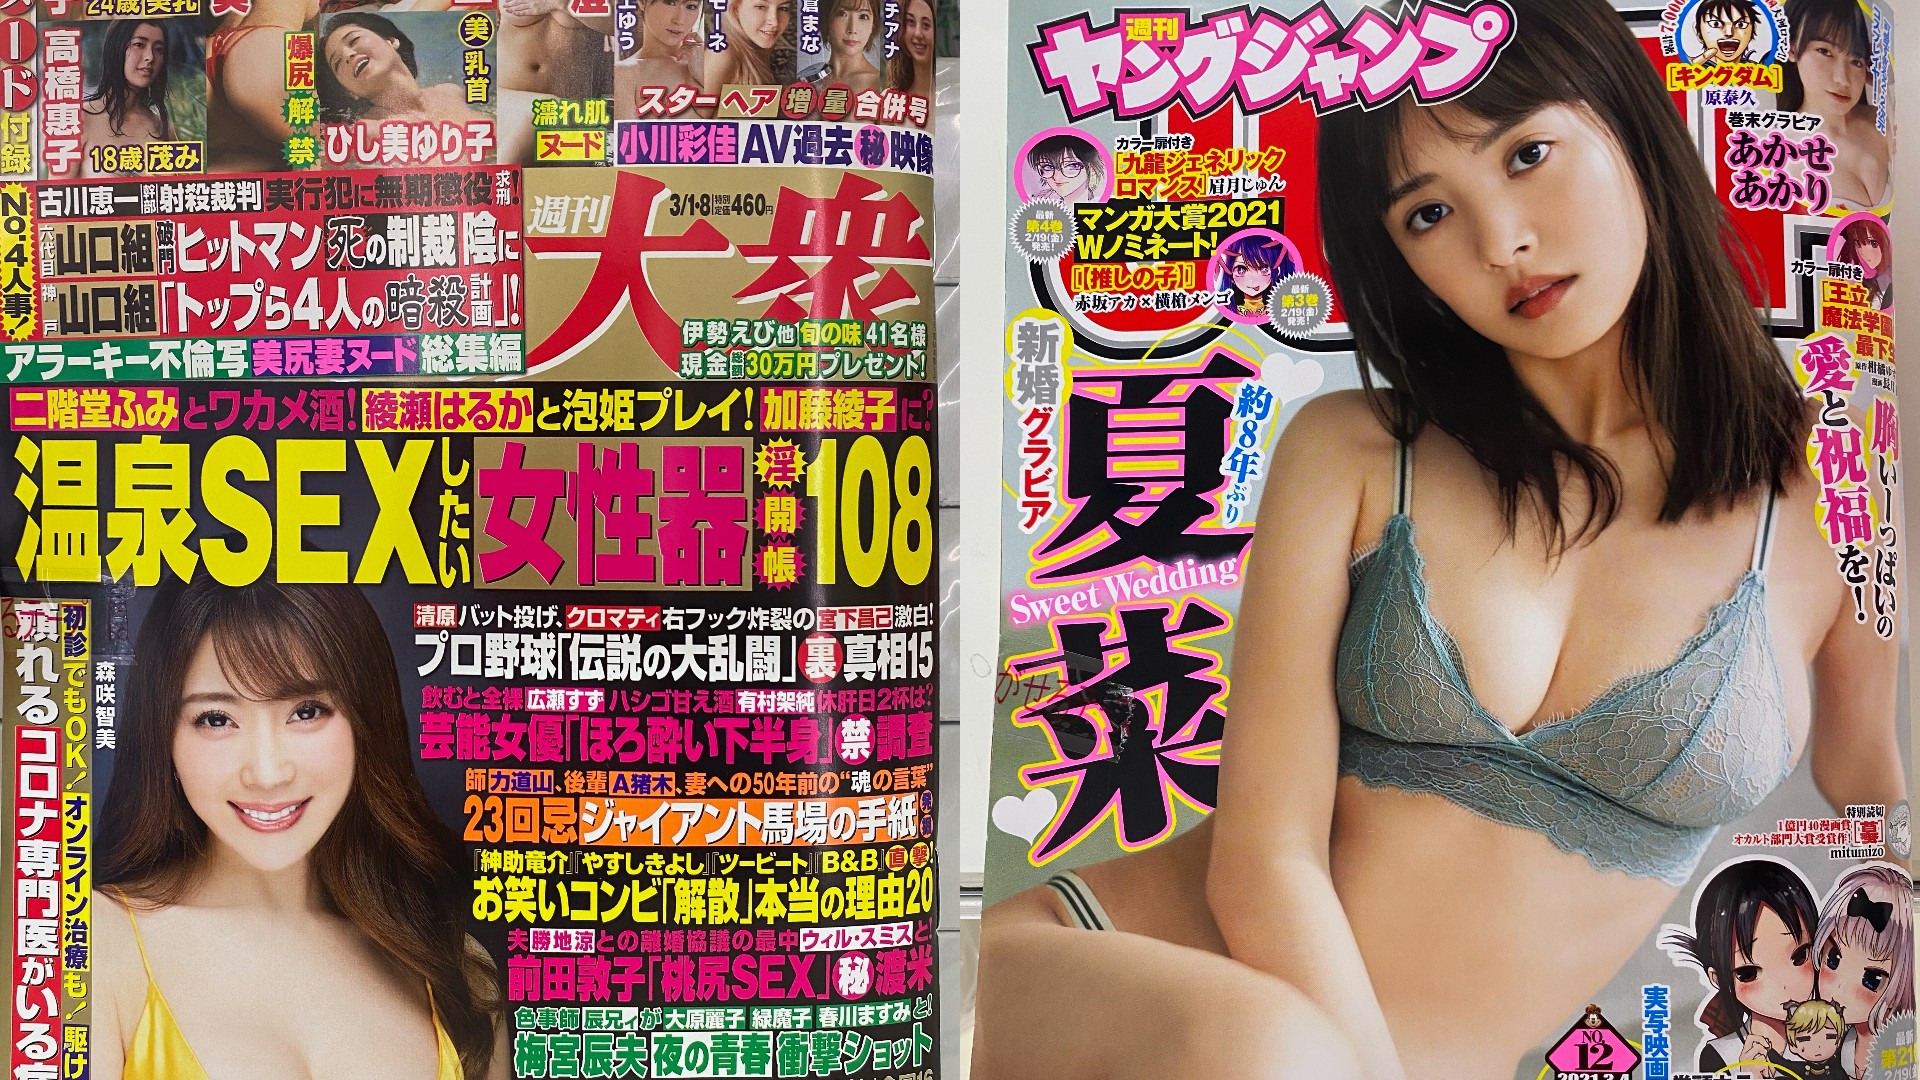 Japanese Magazines Porn. 